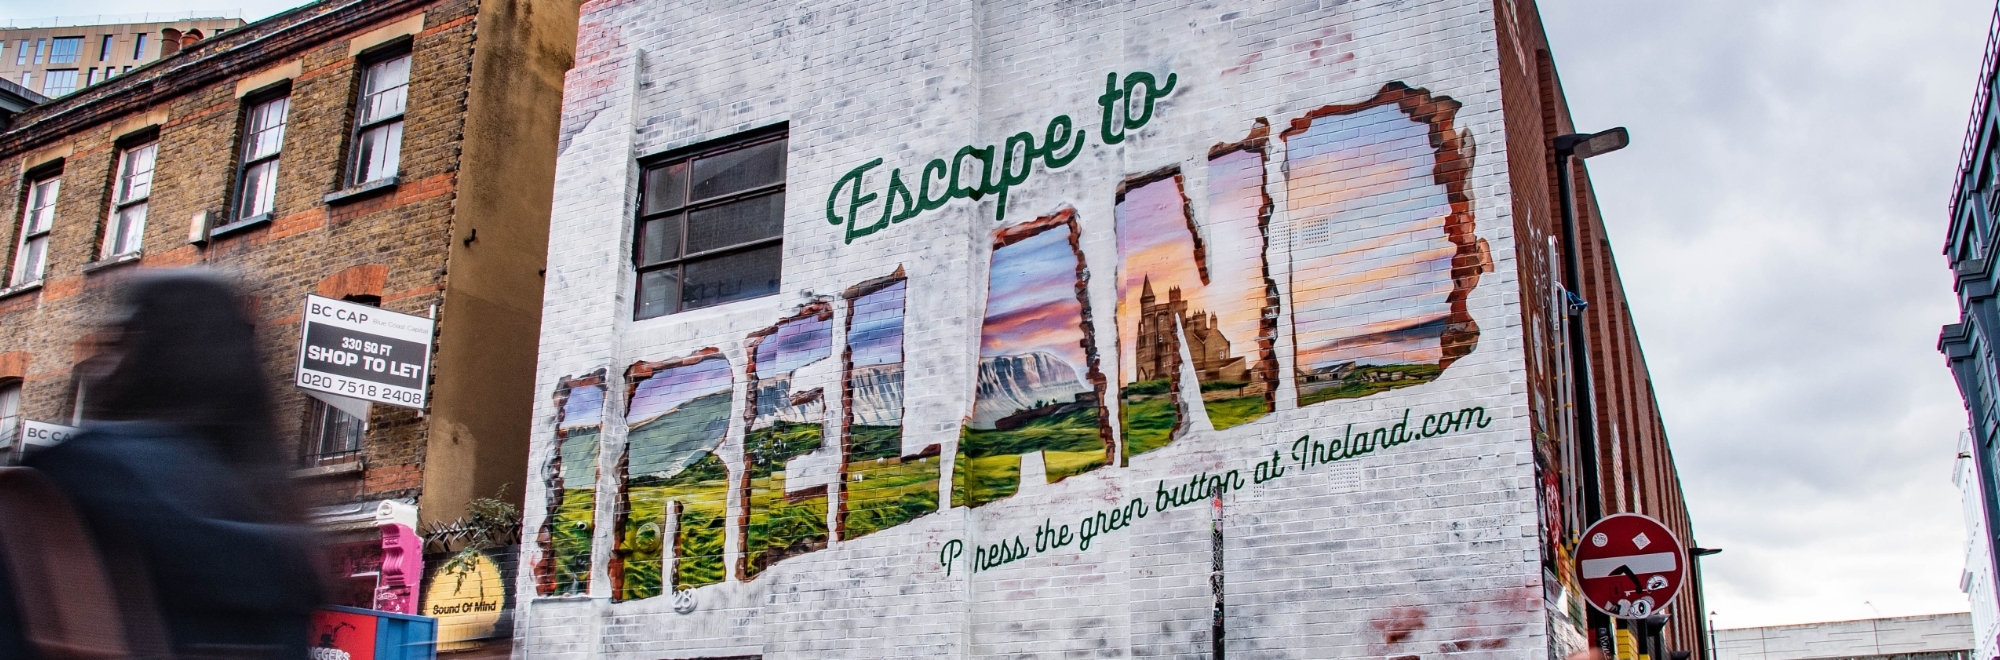 Escape the city: Publicis•Poke breaks through Shoreditch walls to show Ireland's beautiful landscapes